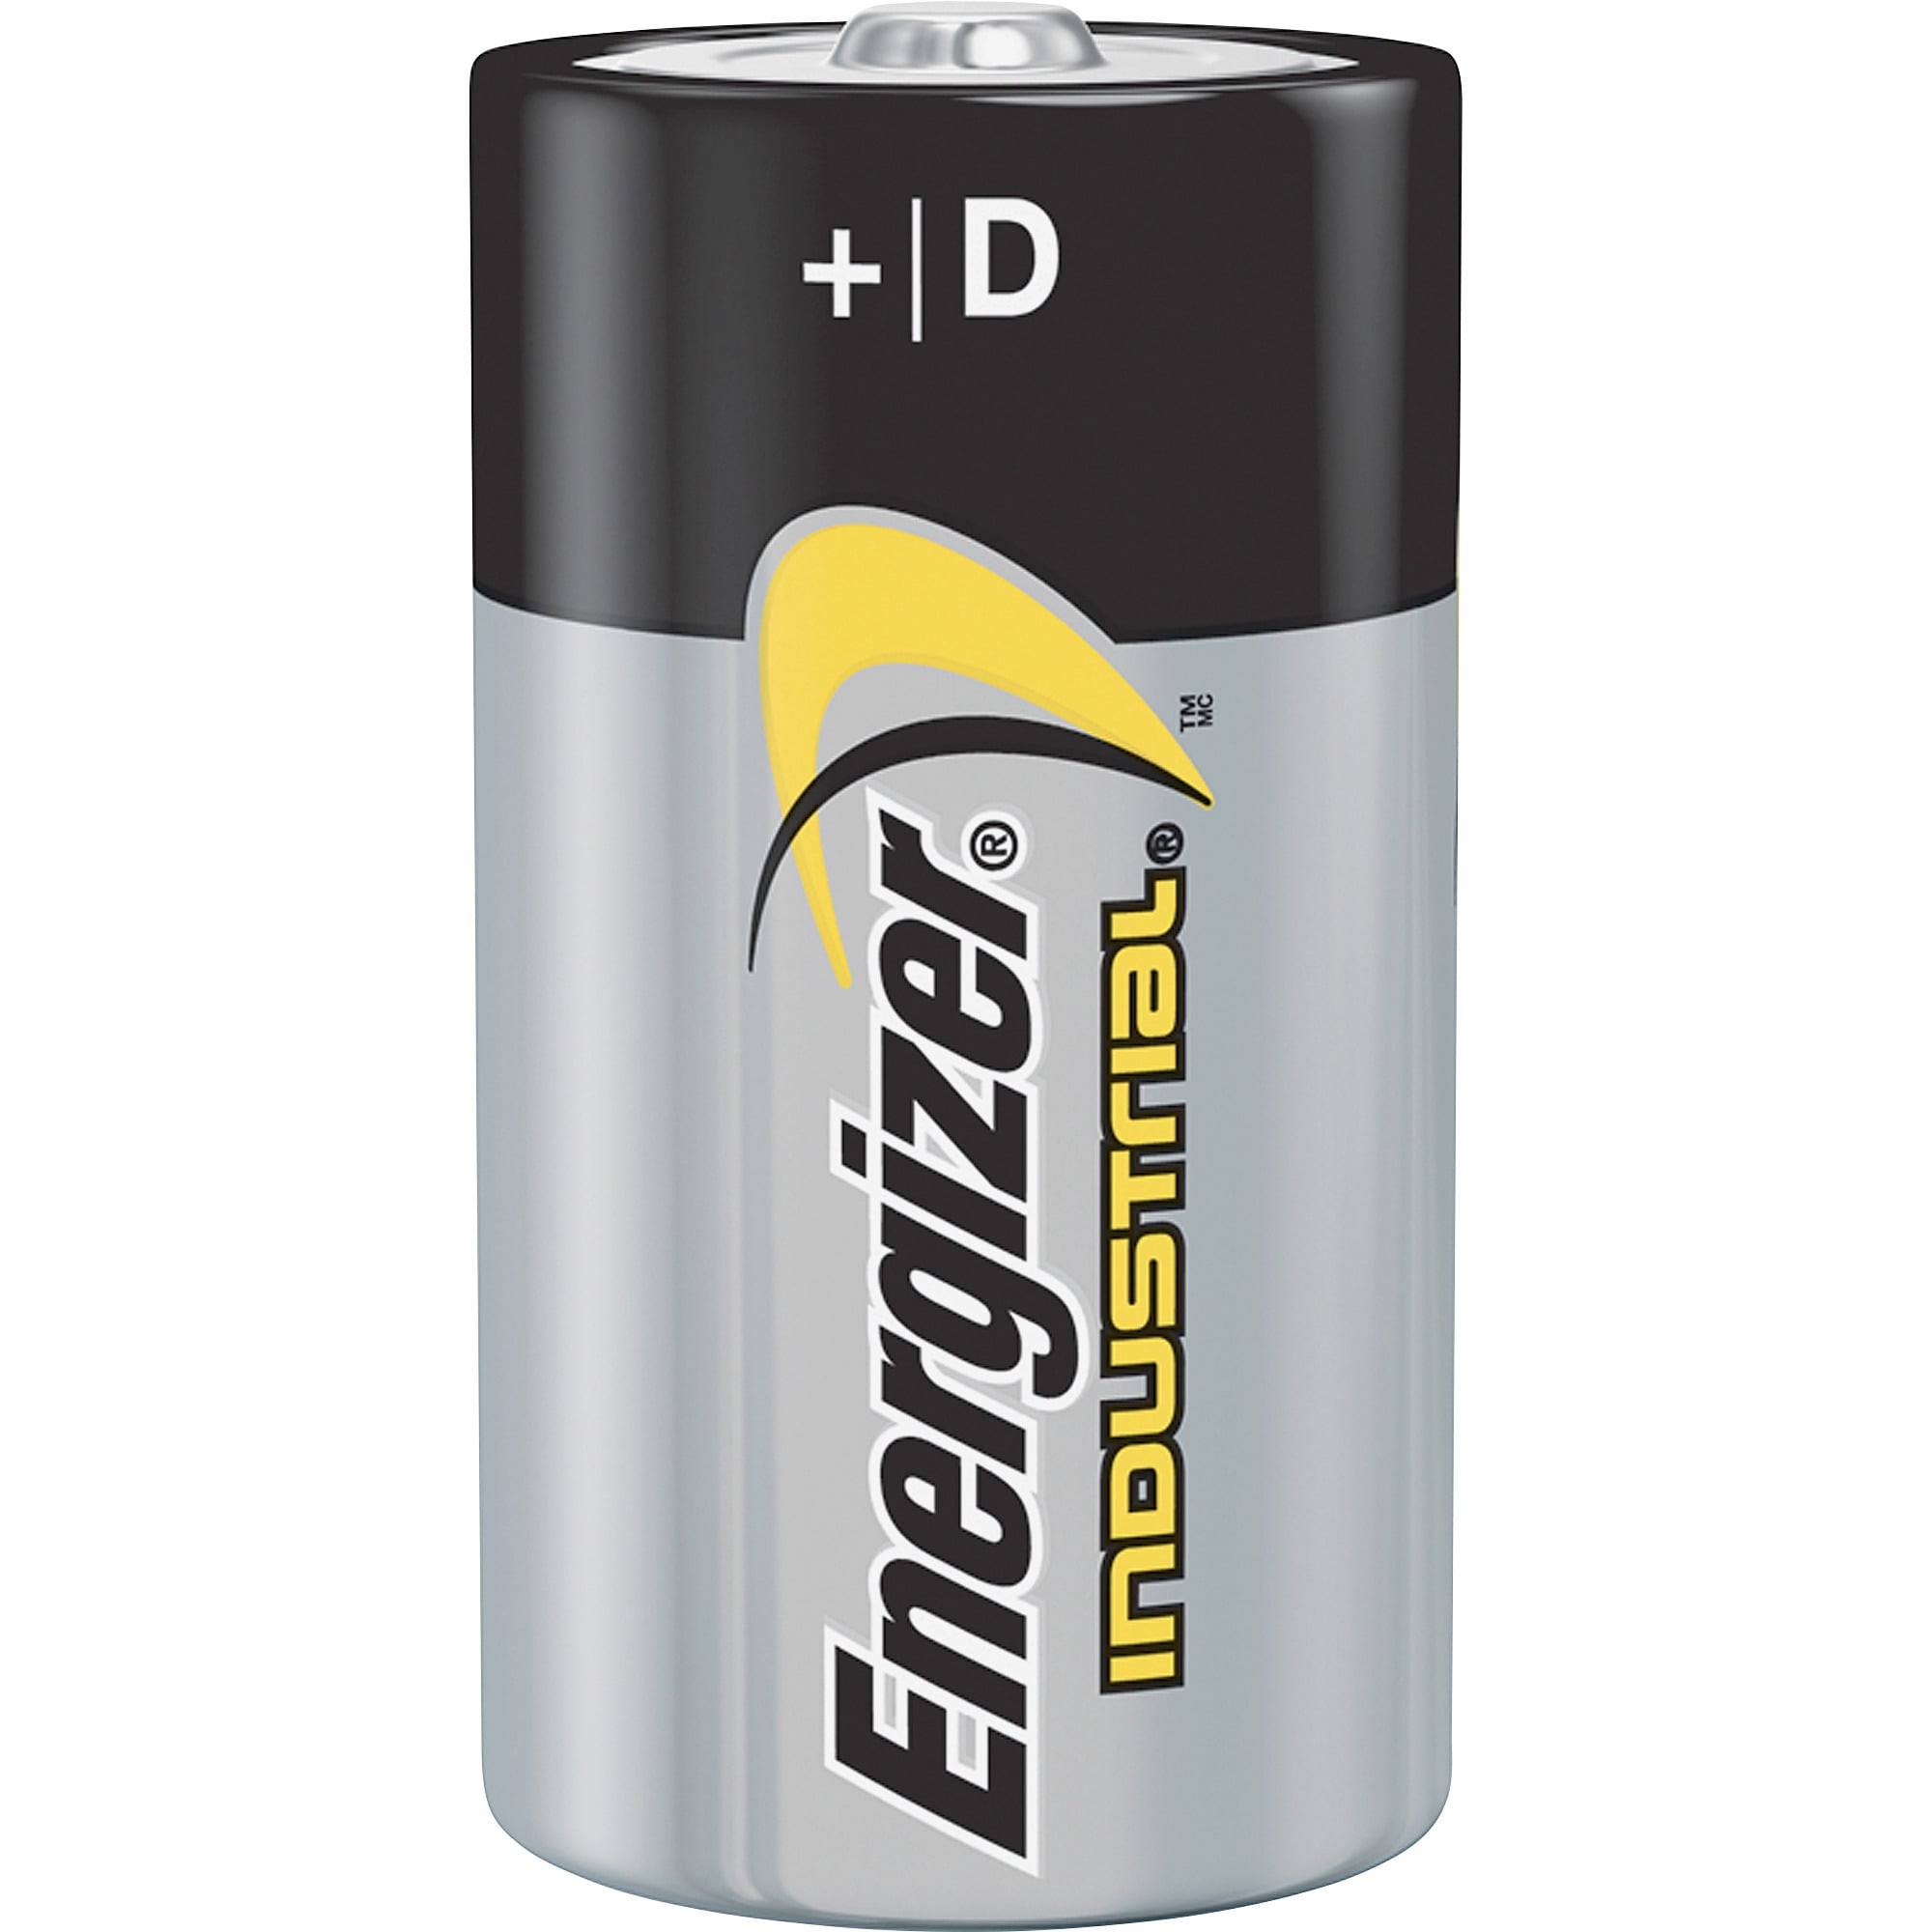 D batteries. Батарейка Energizer lr20. Батарейка lr20 (d) Energizer. Батарейка Energizer lr14 Industrial. Energizer lr20 Industrial.